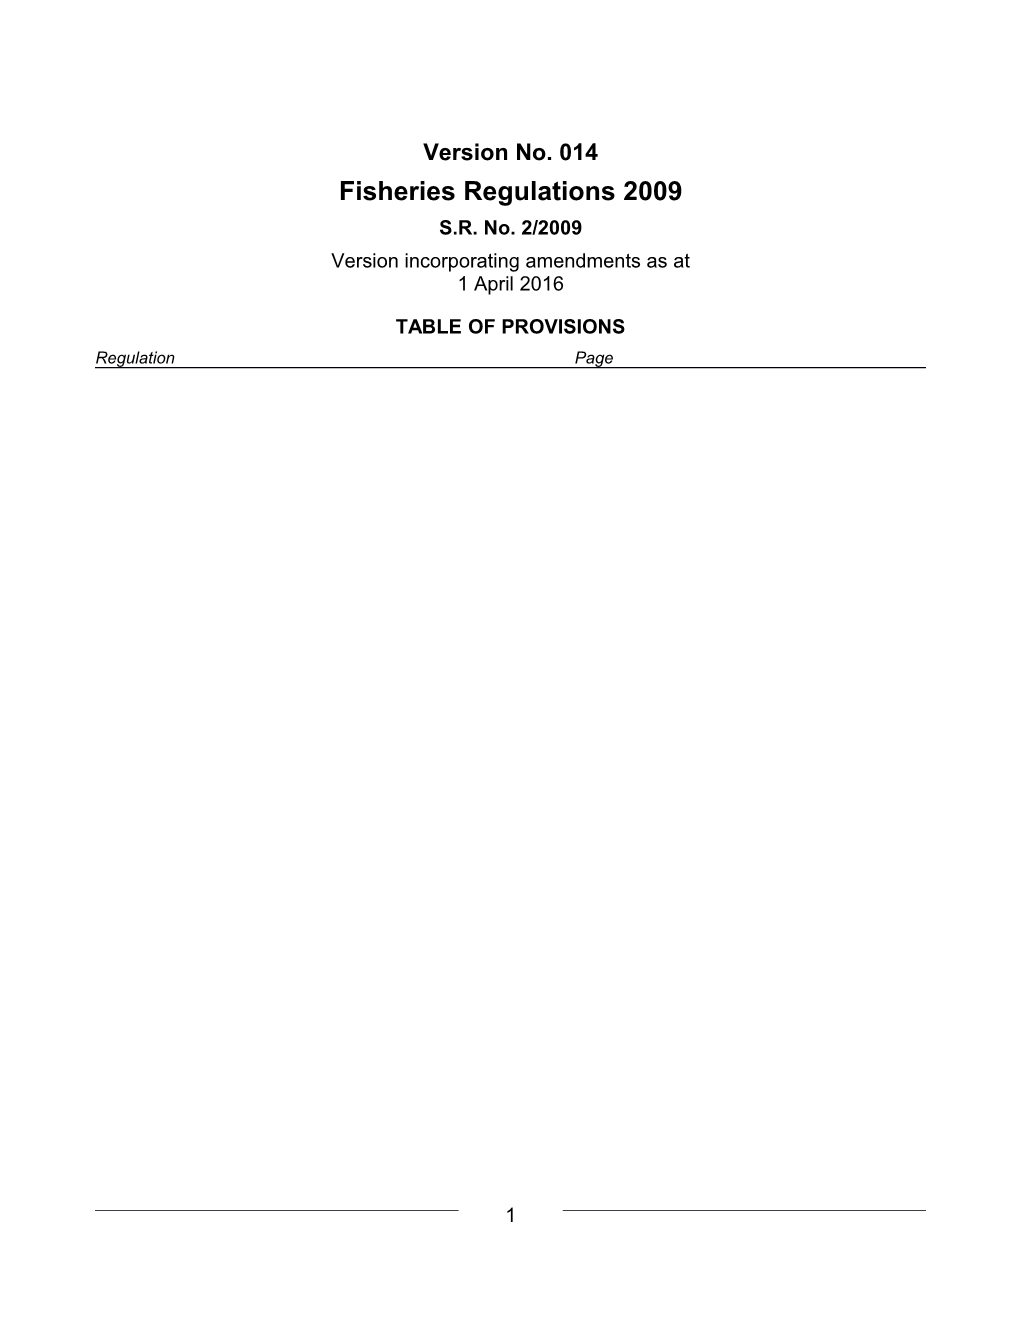 Fisheries Regulations 2009